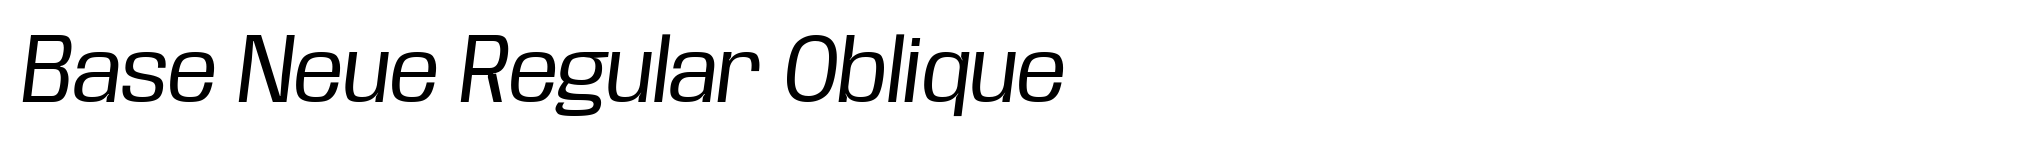 Base Neue Regular Oblique image